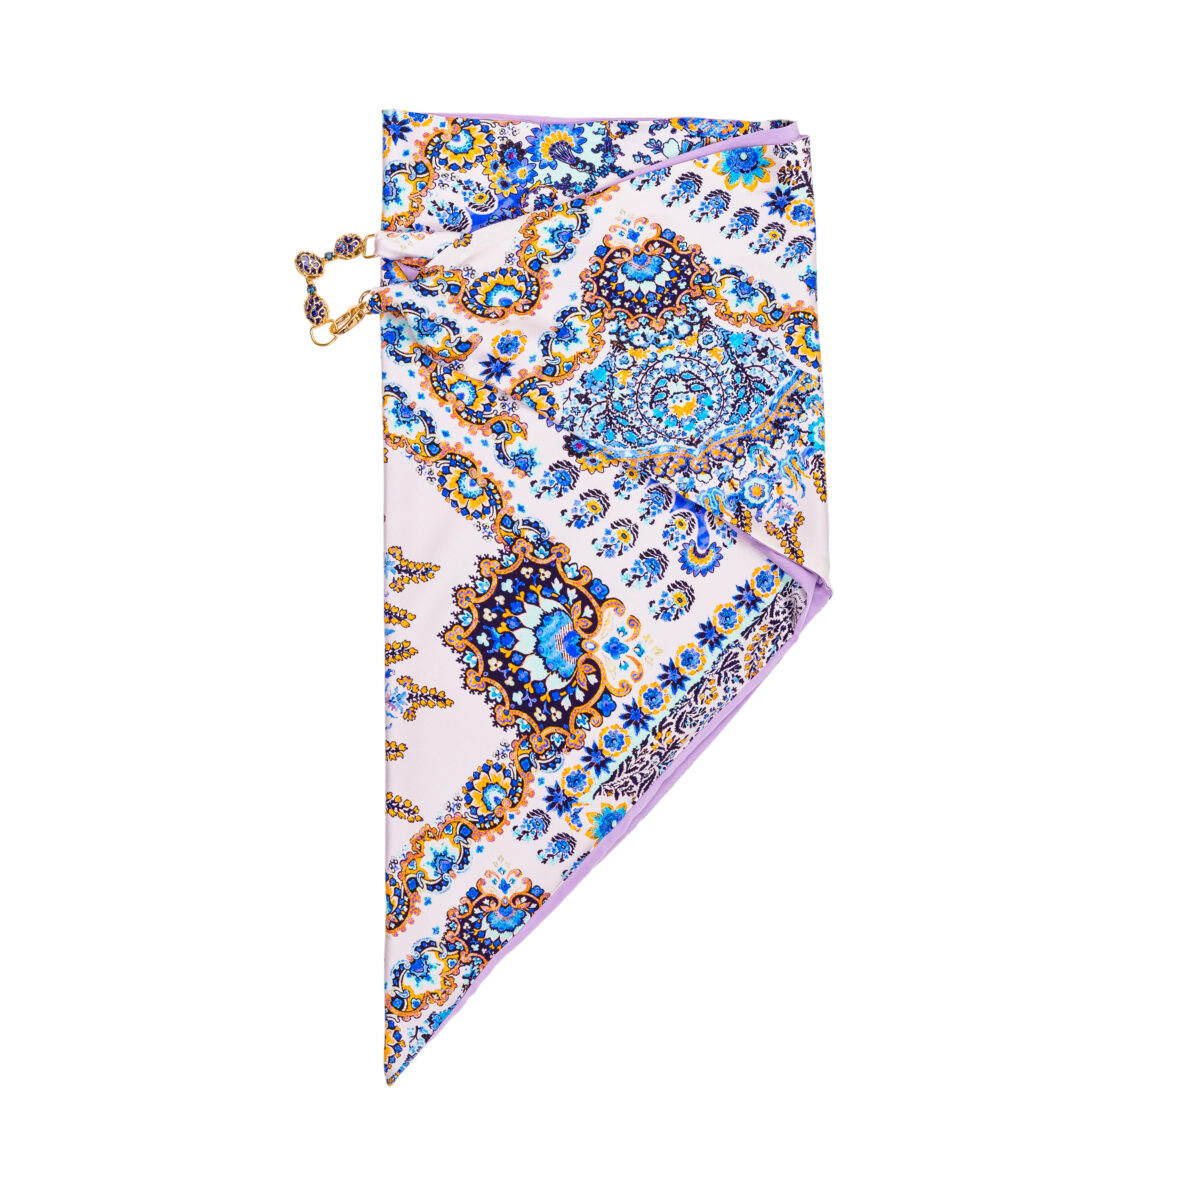 Cepparulo Sartoria Italiana foulard di seta 100% MADE IN ITALY